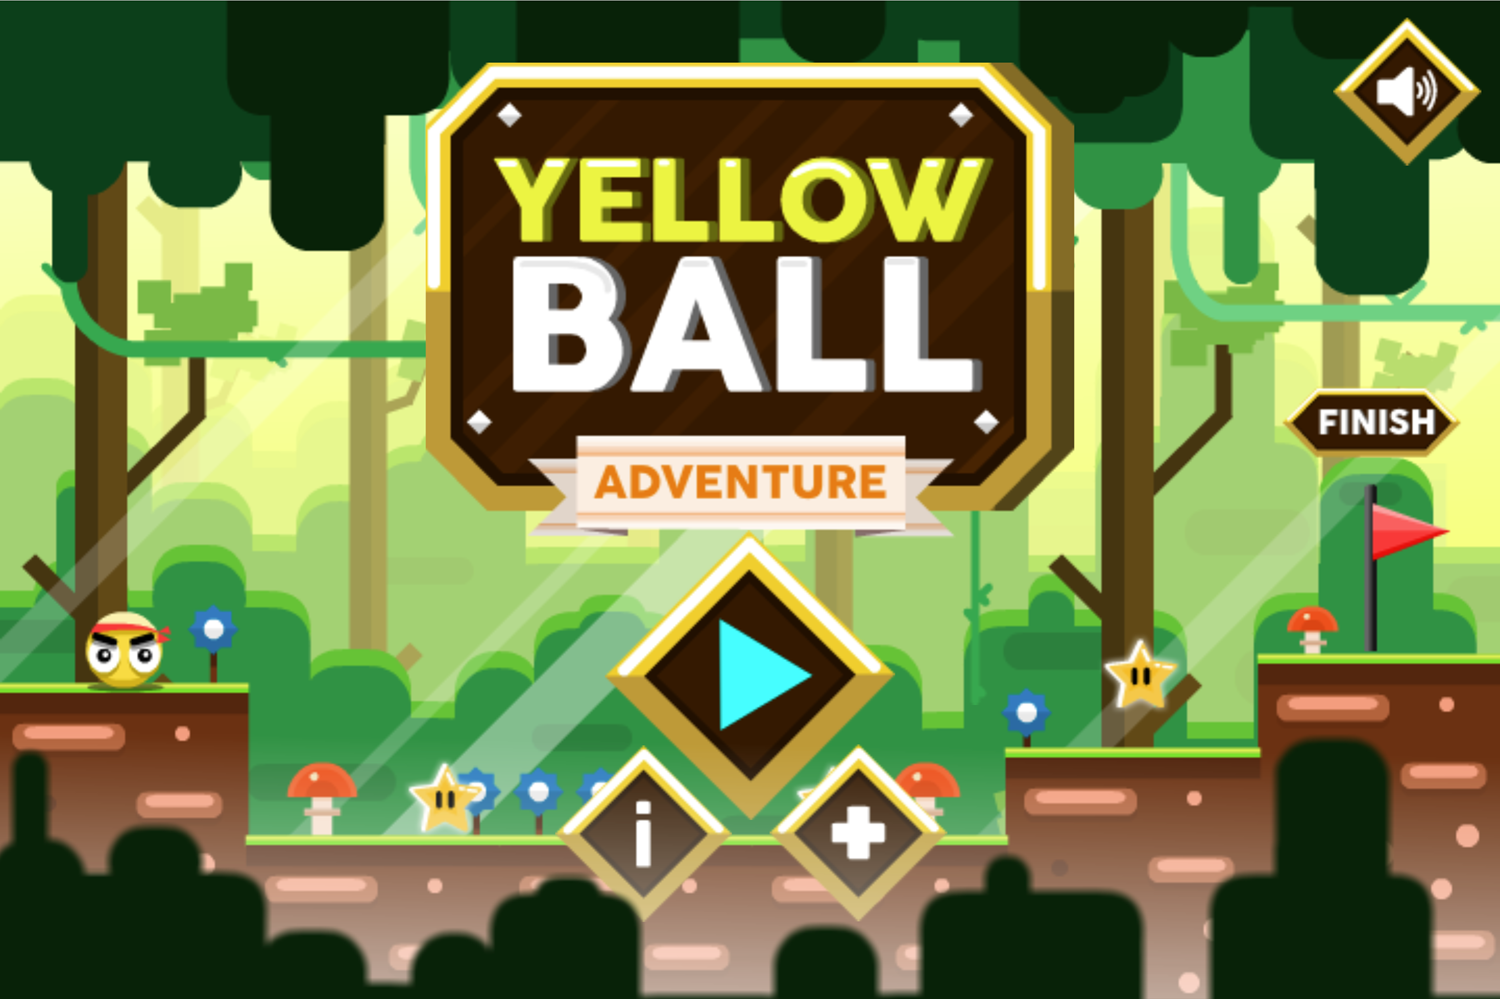 Yellow Ball Adventure Game Welcome Screen Screenshot.